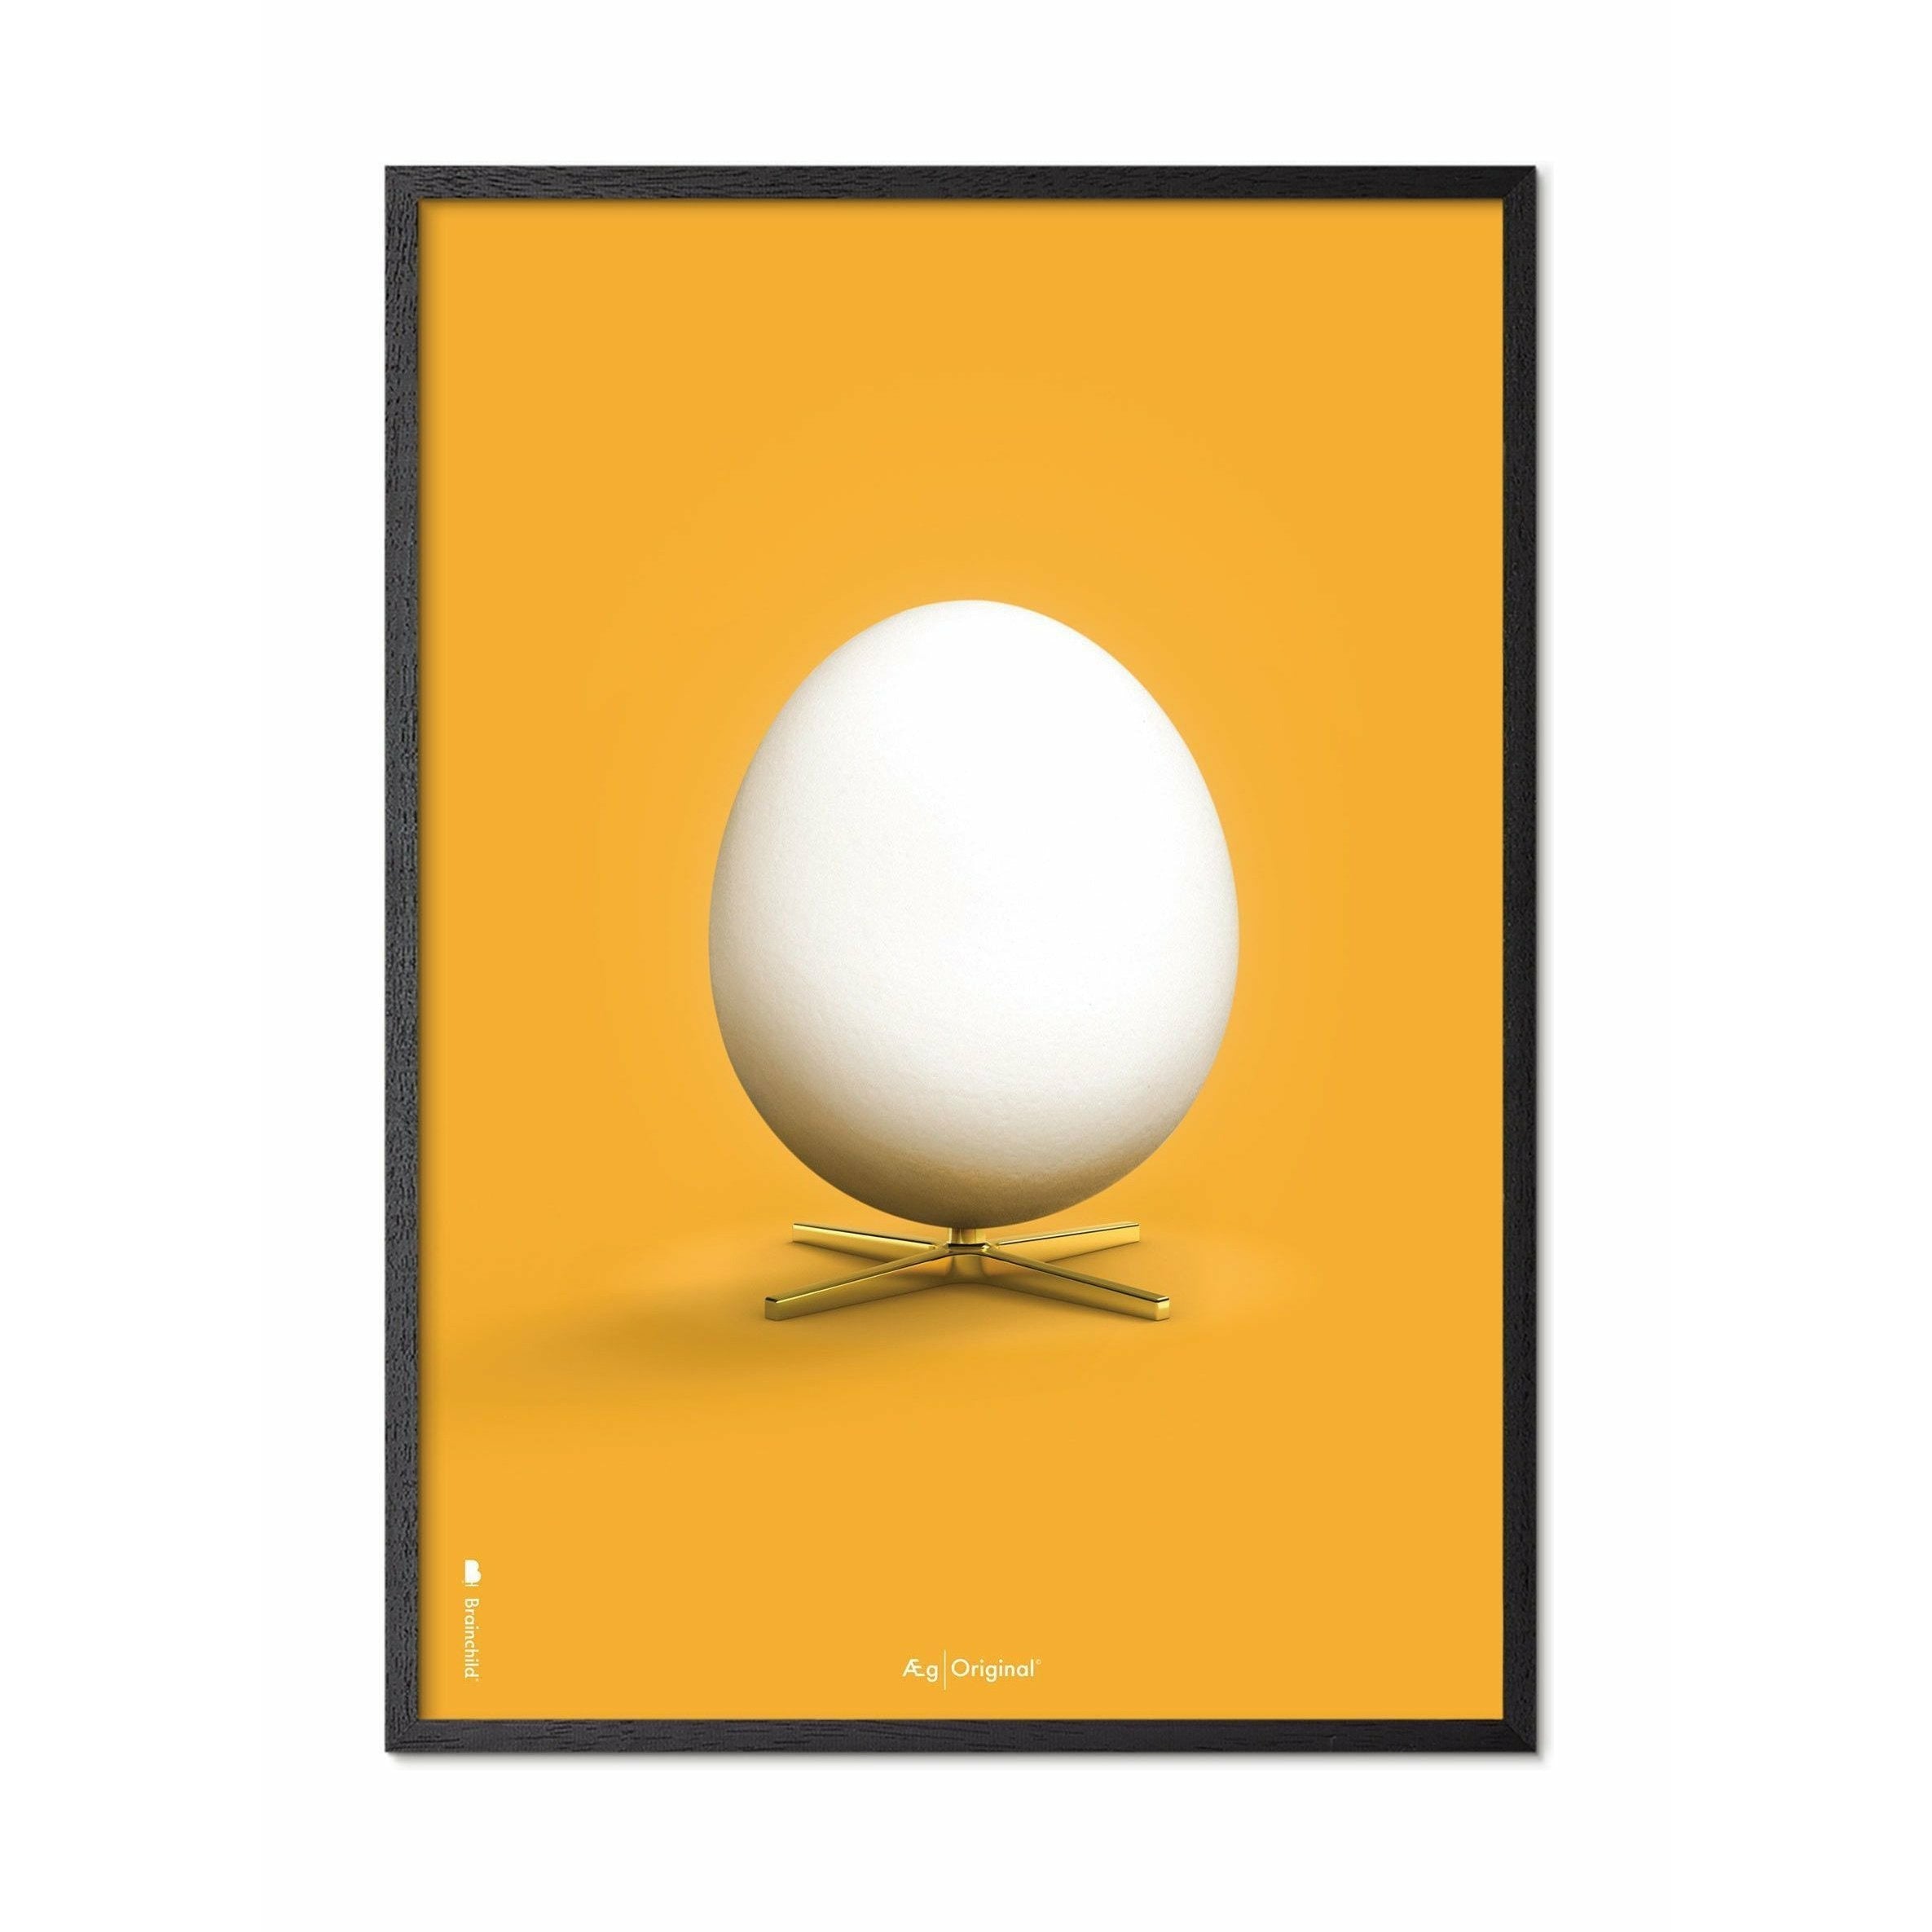 Póster clásico de huevo de creación, marco en madera lacada negra de 30x40 cm, fondo amarillo